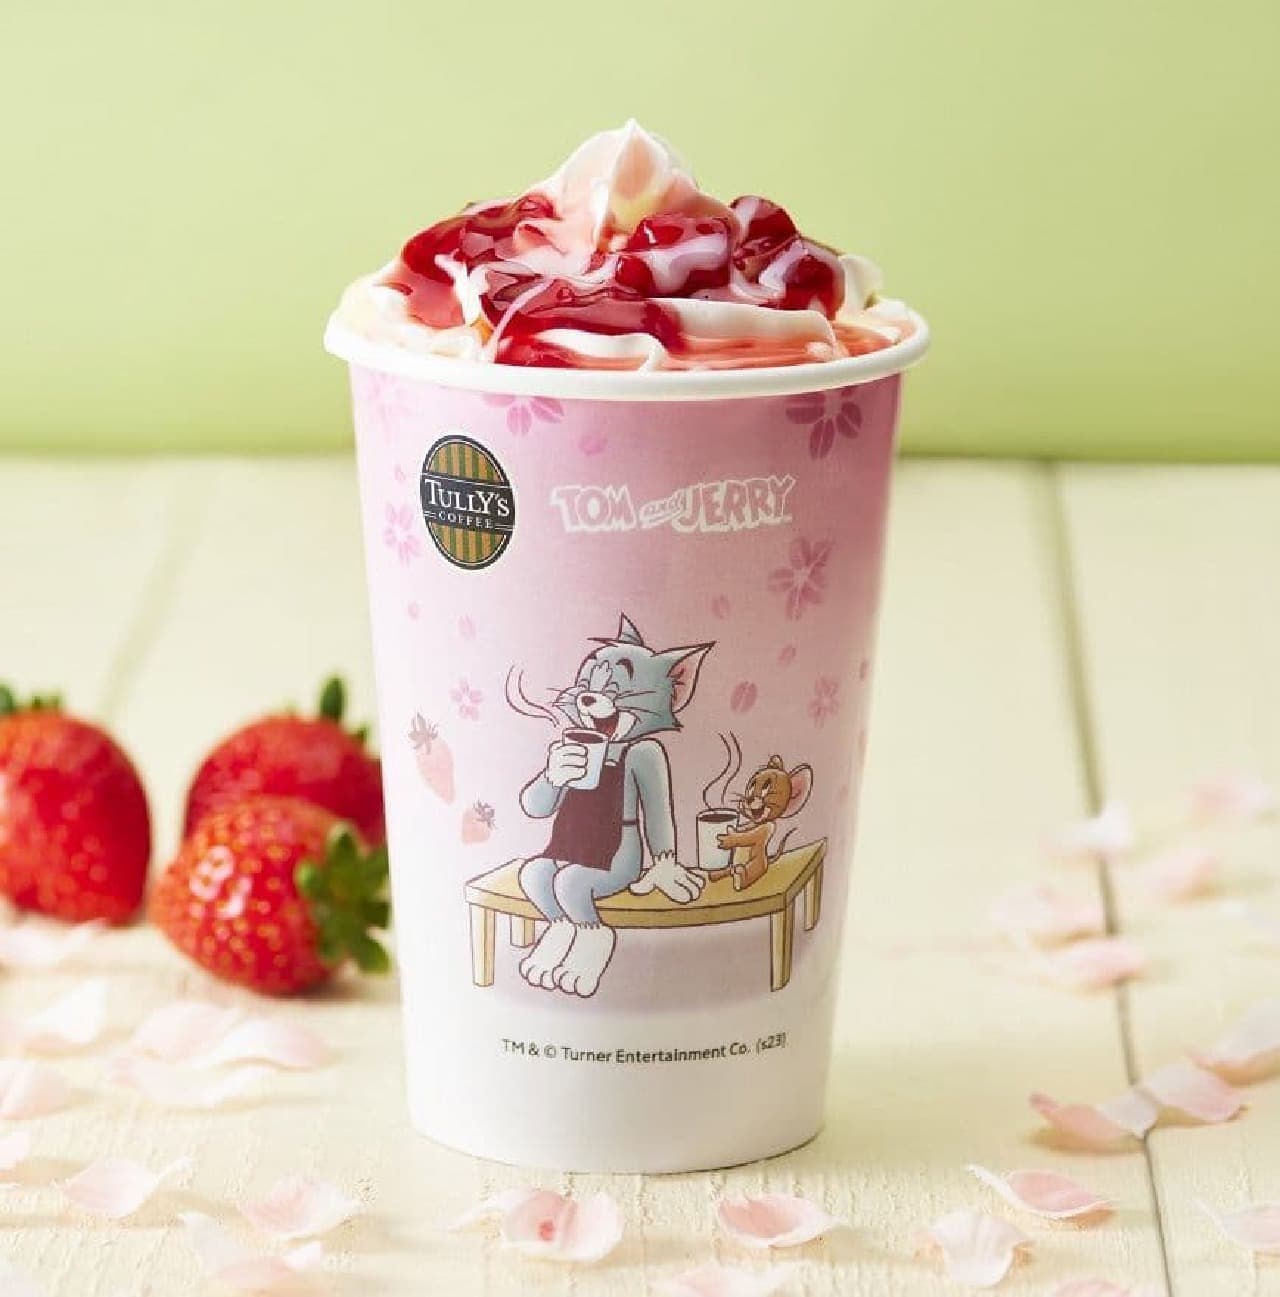 Tully's Coffee "Tom & Jerry & TEA Cherry-scented Strawberry Royal Milk Tea".